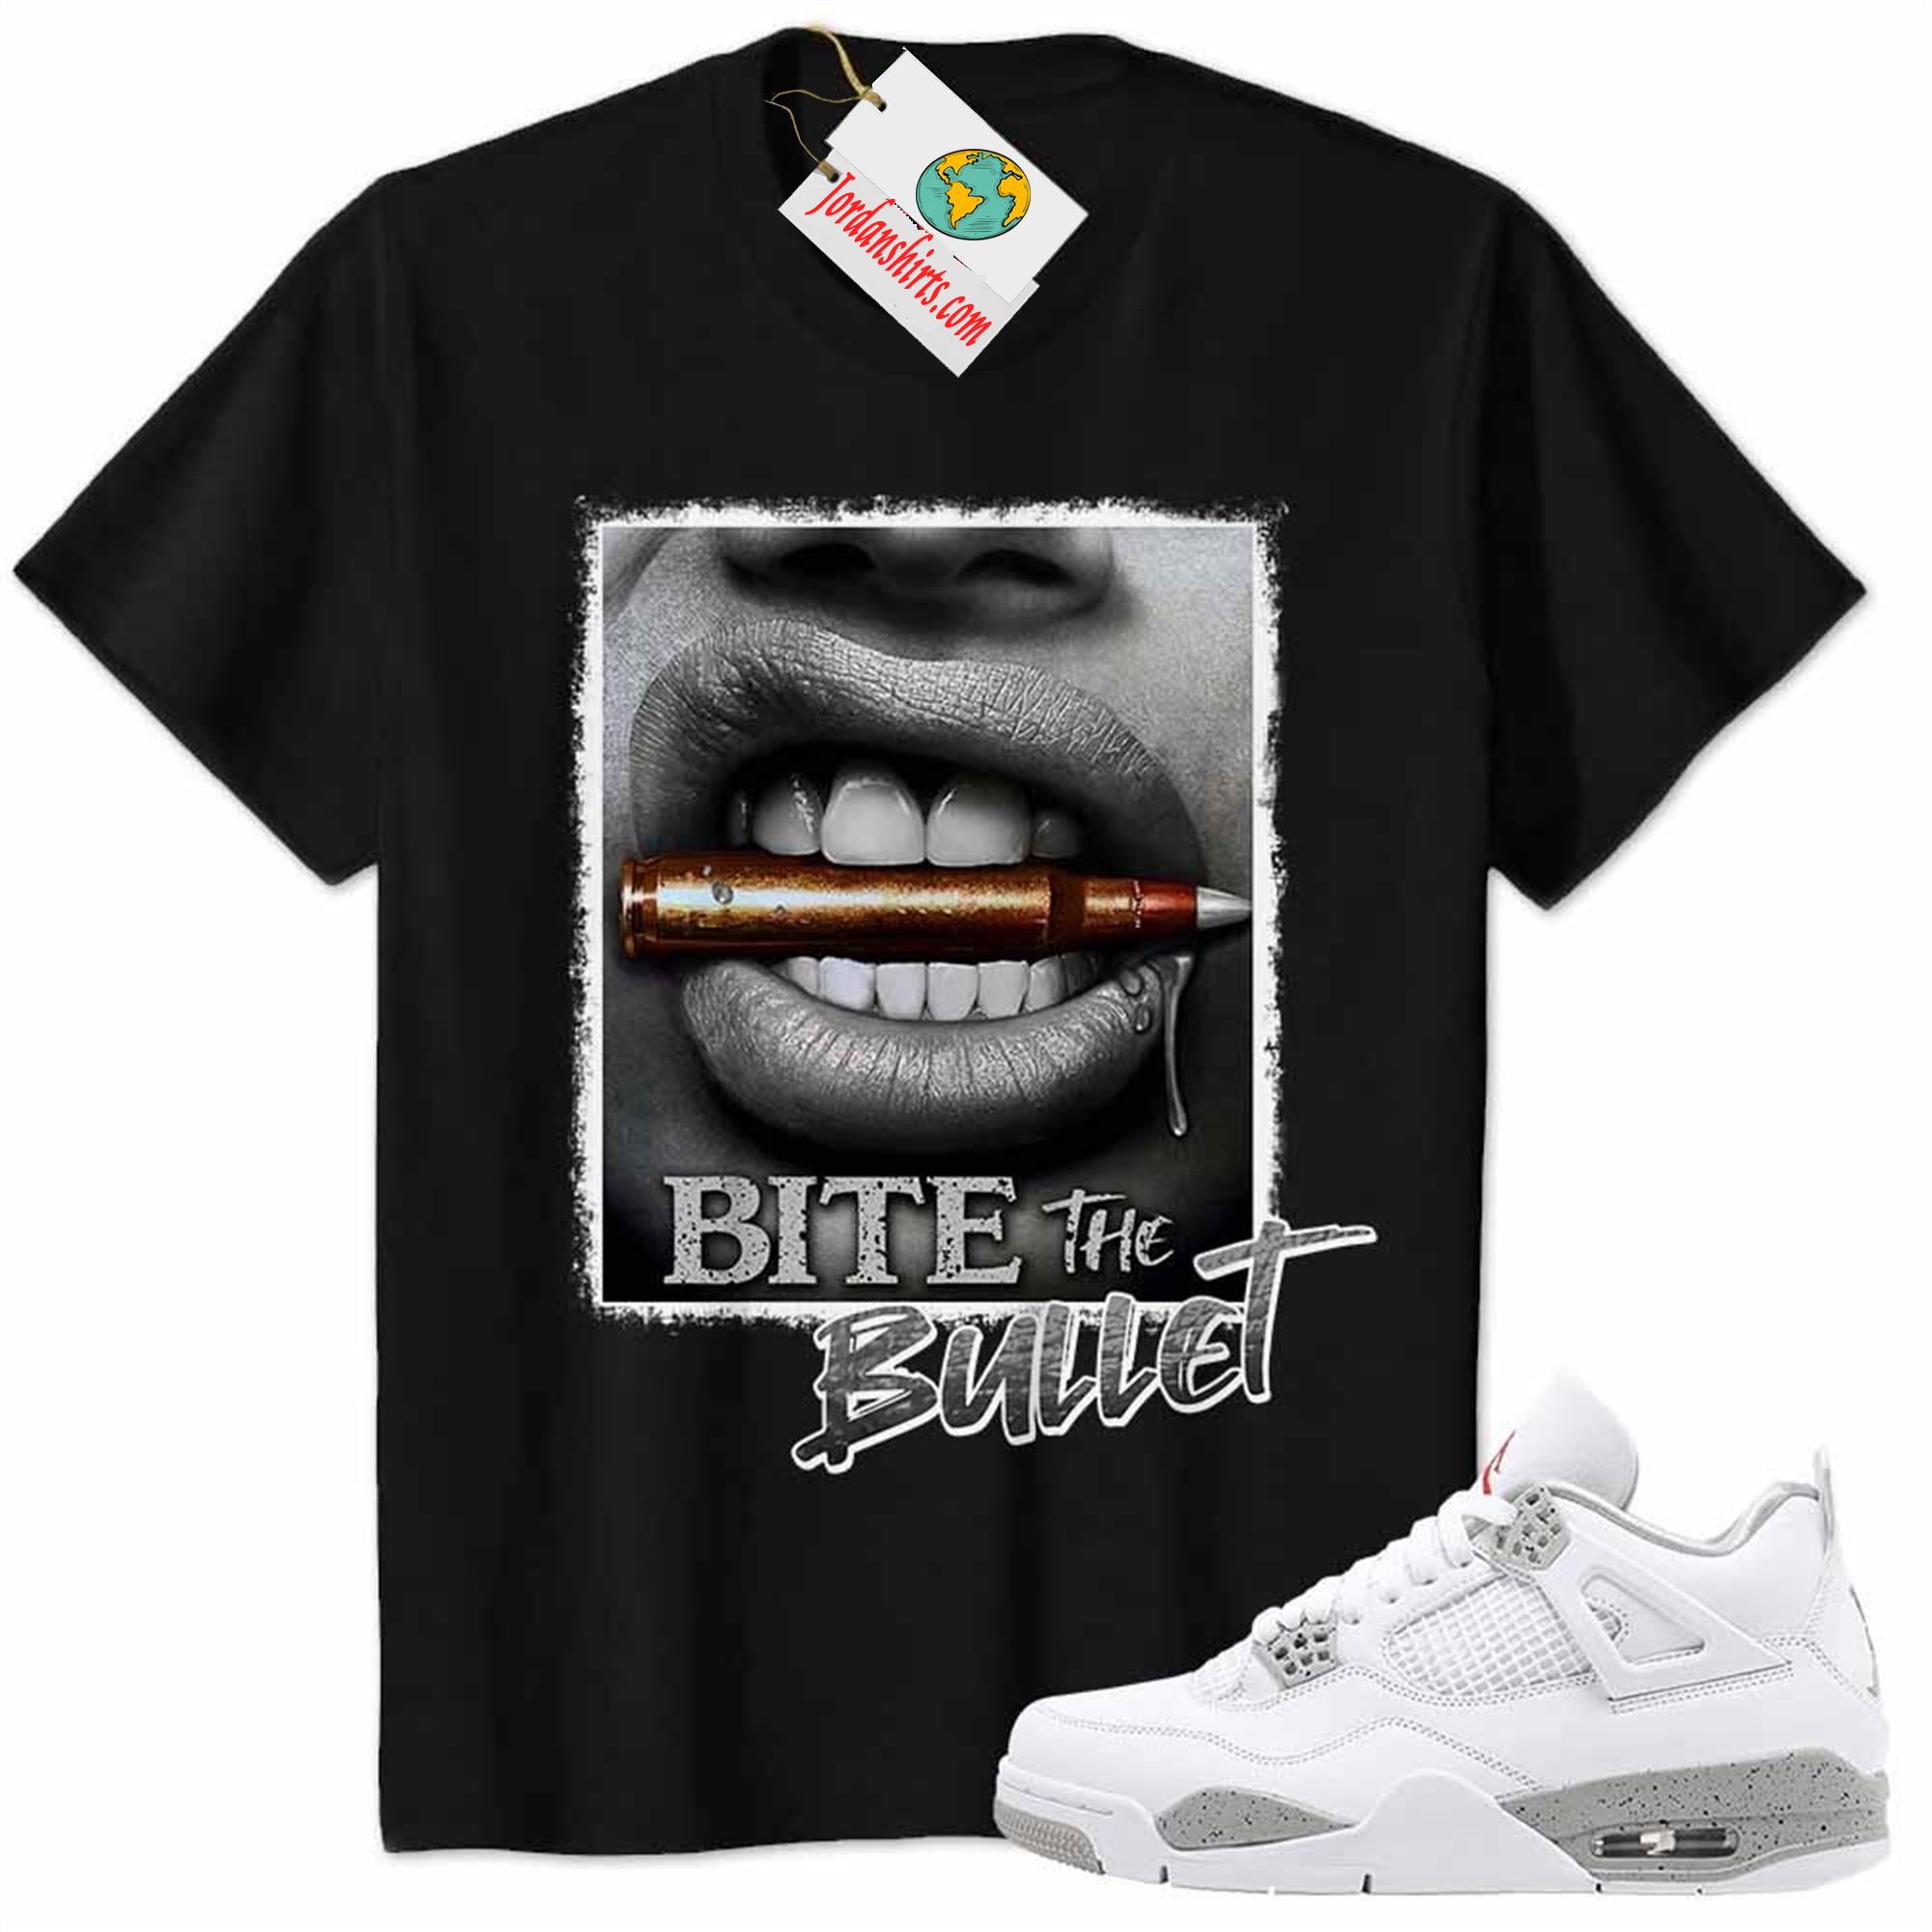 Jordan 4 Shirt, Bite The Bullet Sexy Girl Black Air Jordan 4 White Oreo 4s Full Size Up To 5xl